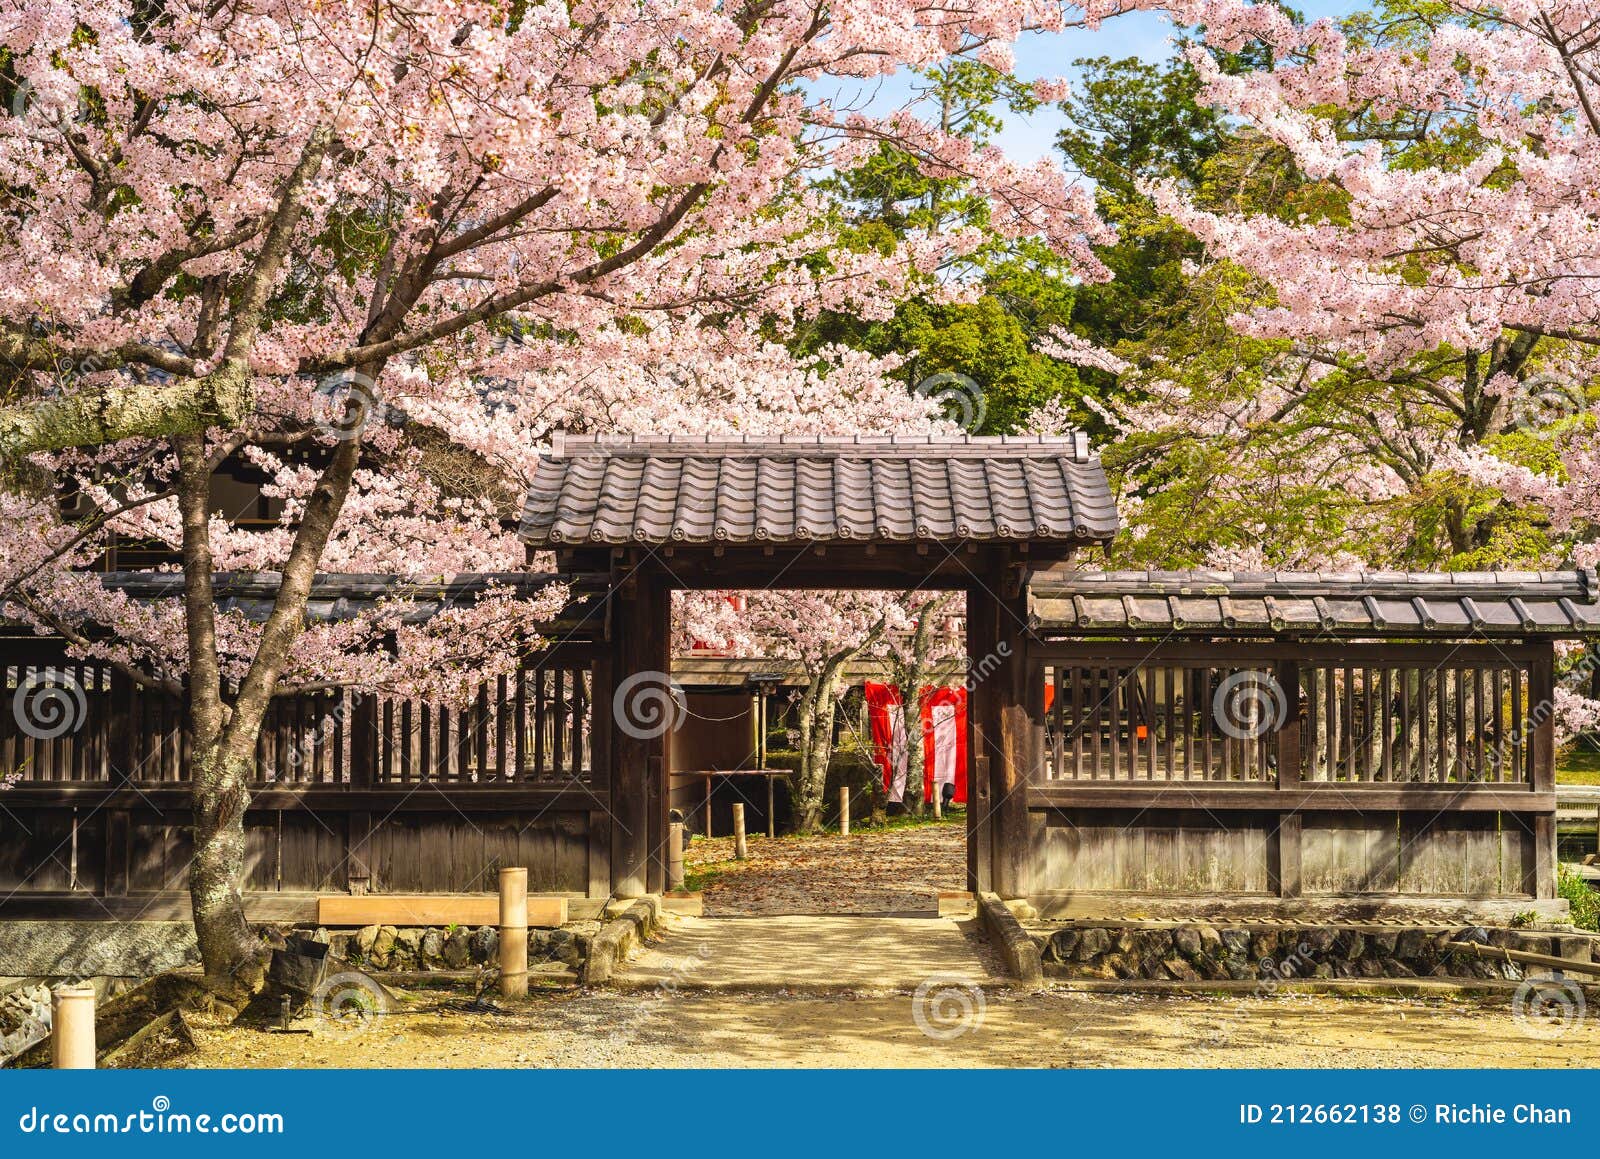 daikaku ji temple with cherry blossom at arashiyama, kyoto, kansai, japan